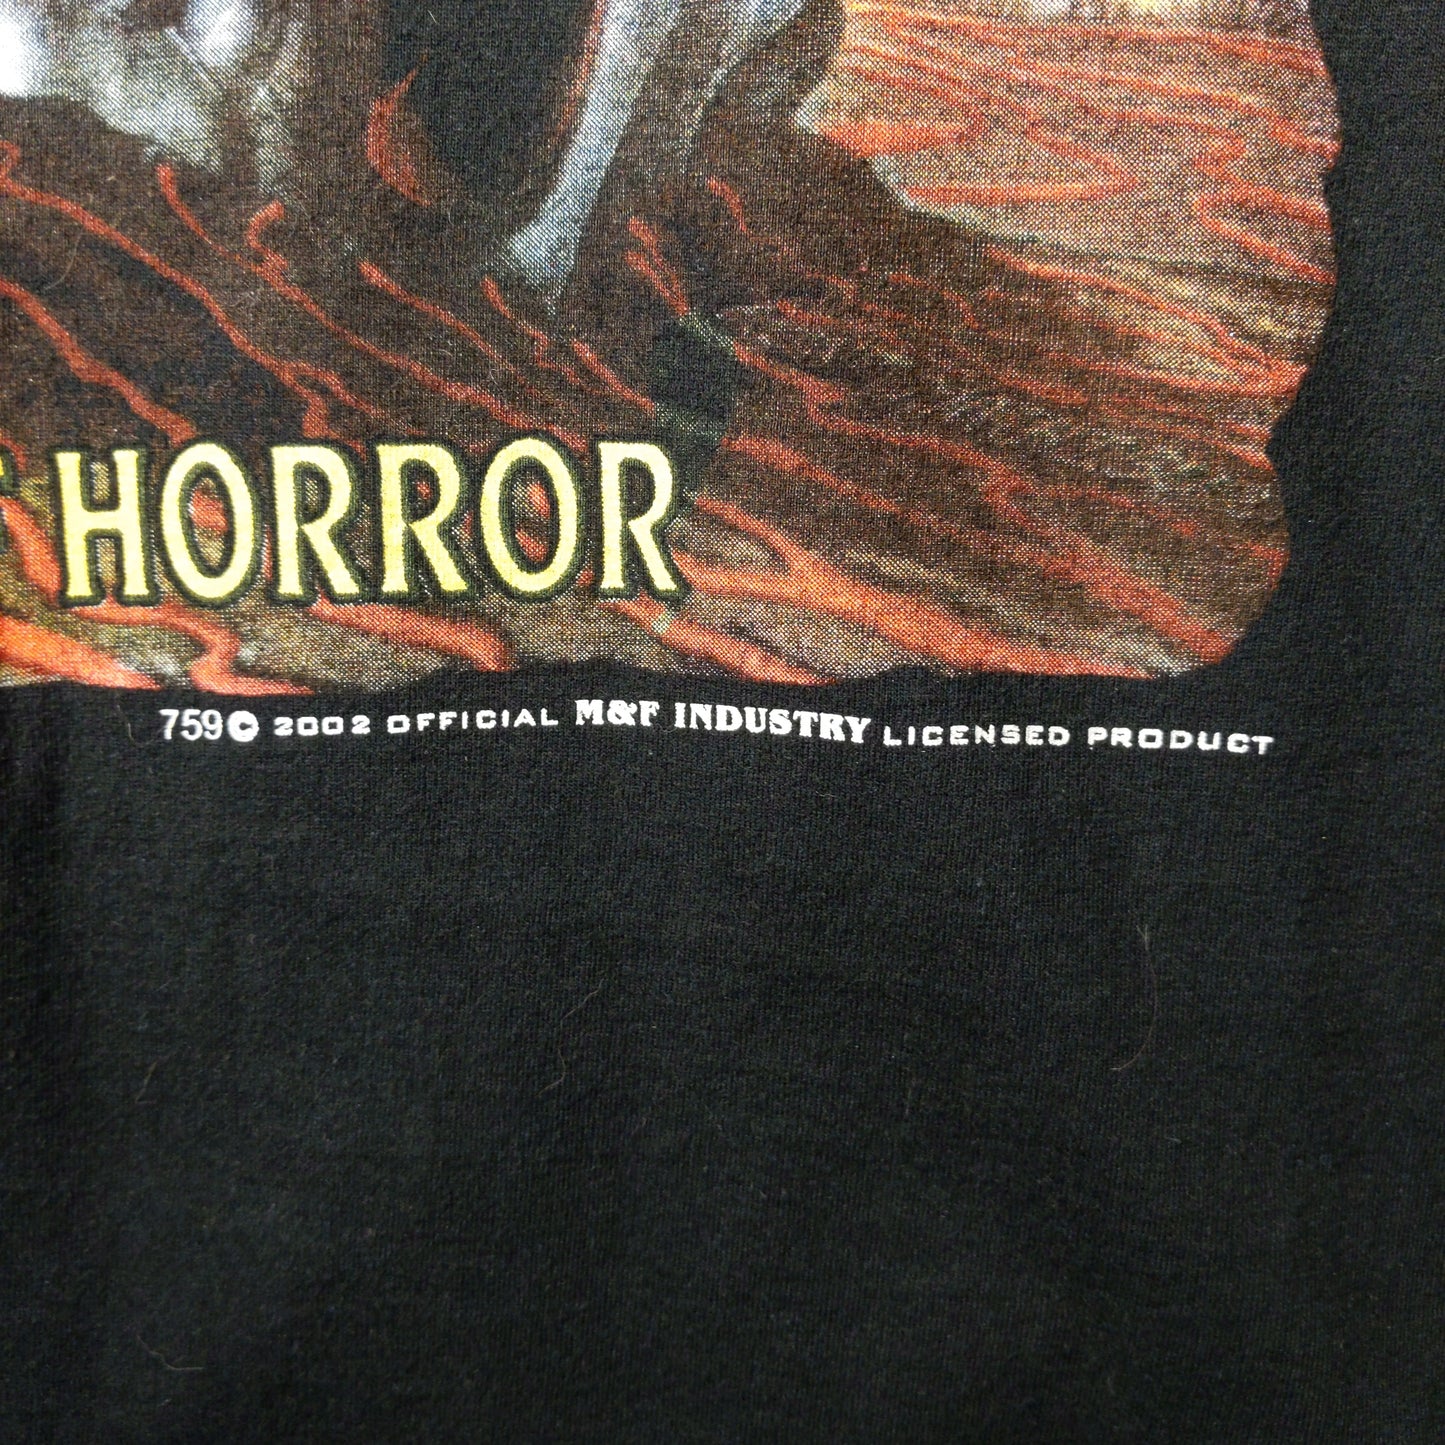 2002 Possessed - The Eyes of Horror vintage shirt